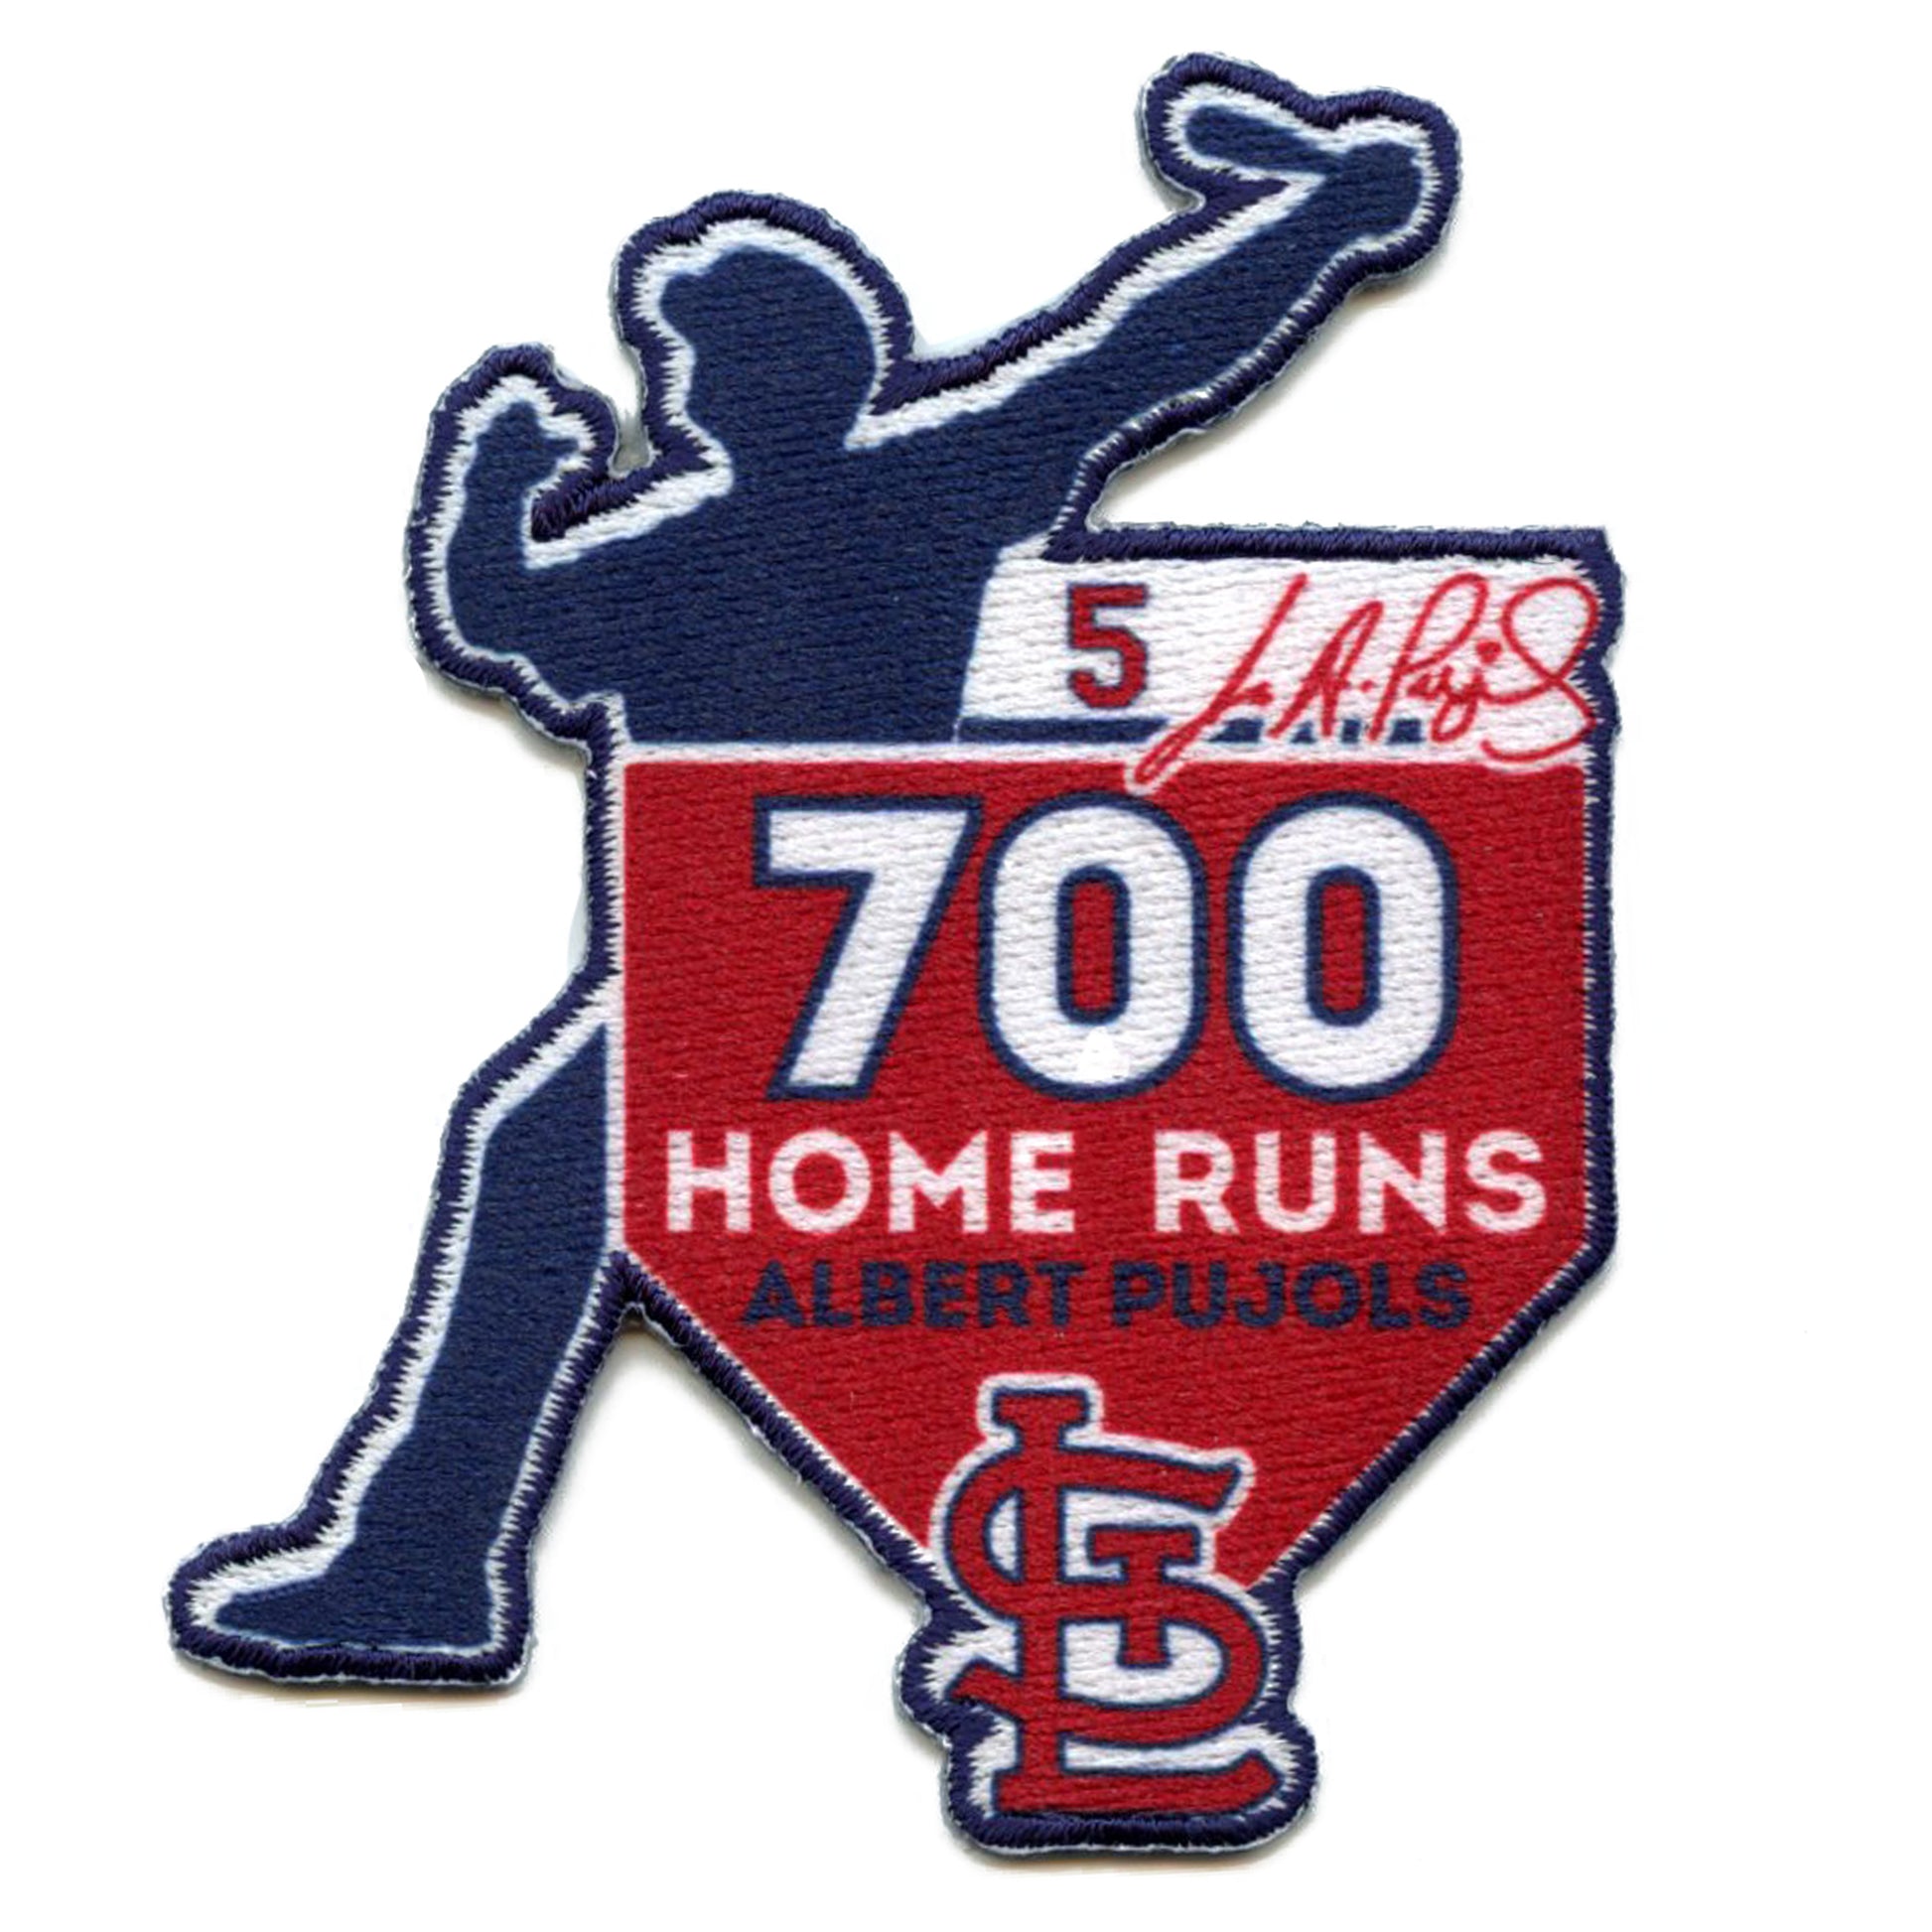 700 homeruns baseball shirt, commemorative pujols 700 homeruns